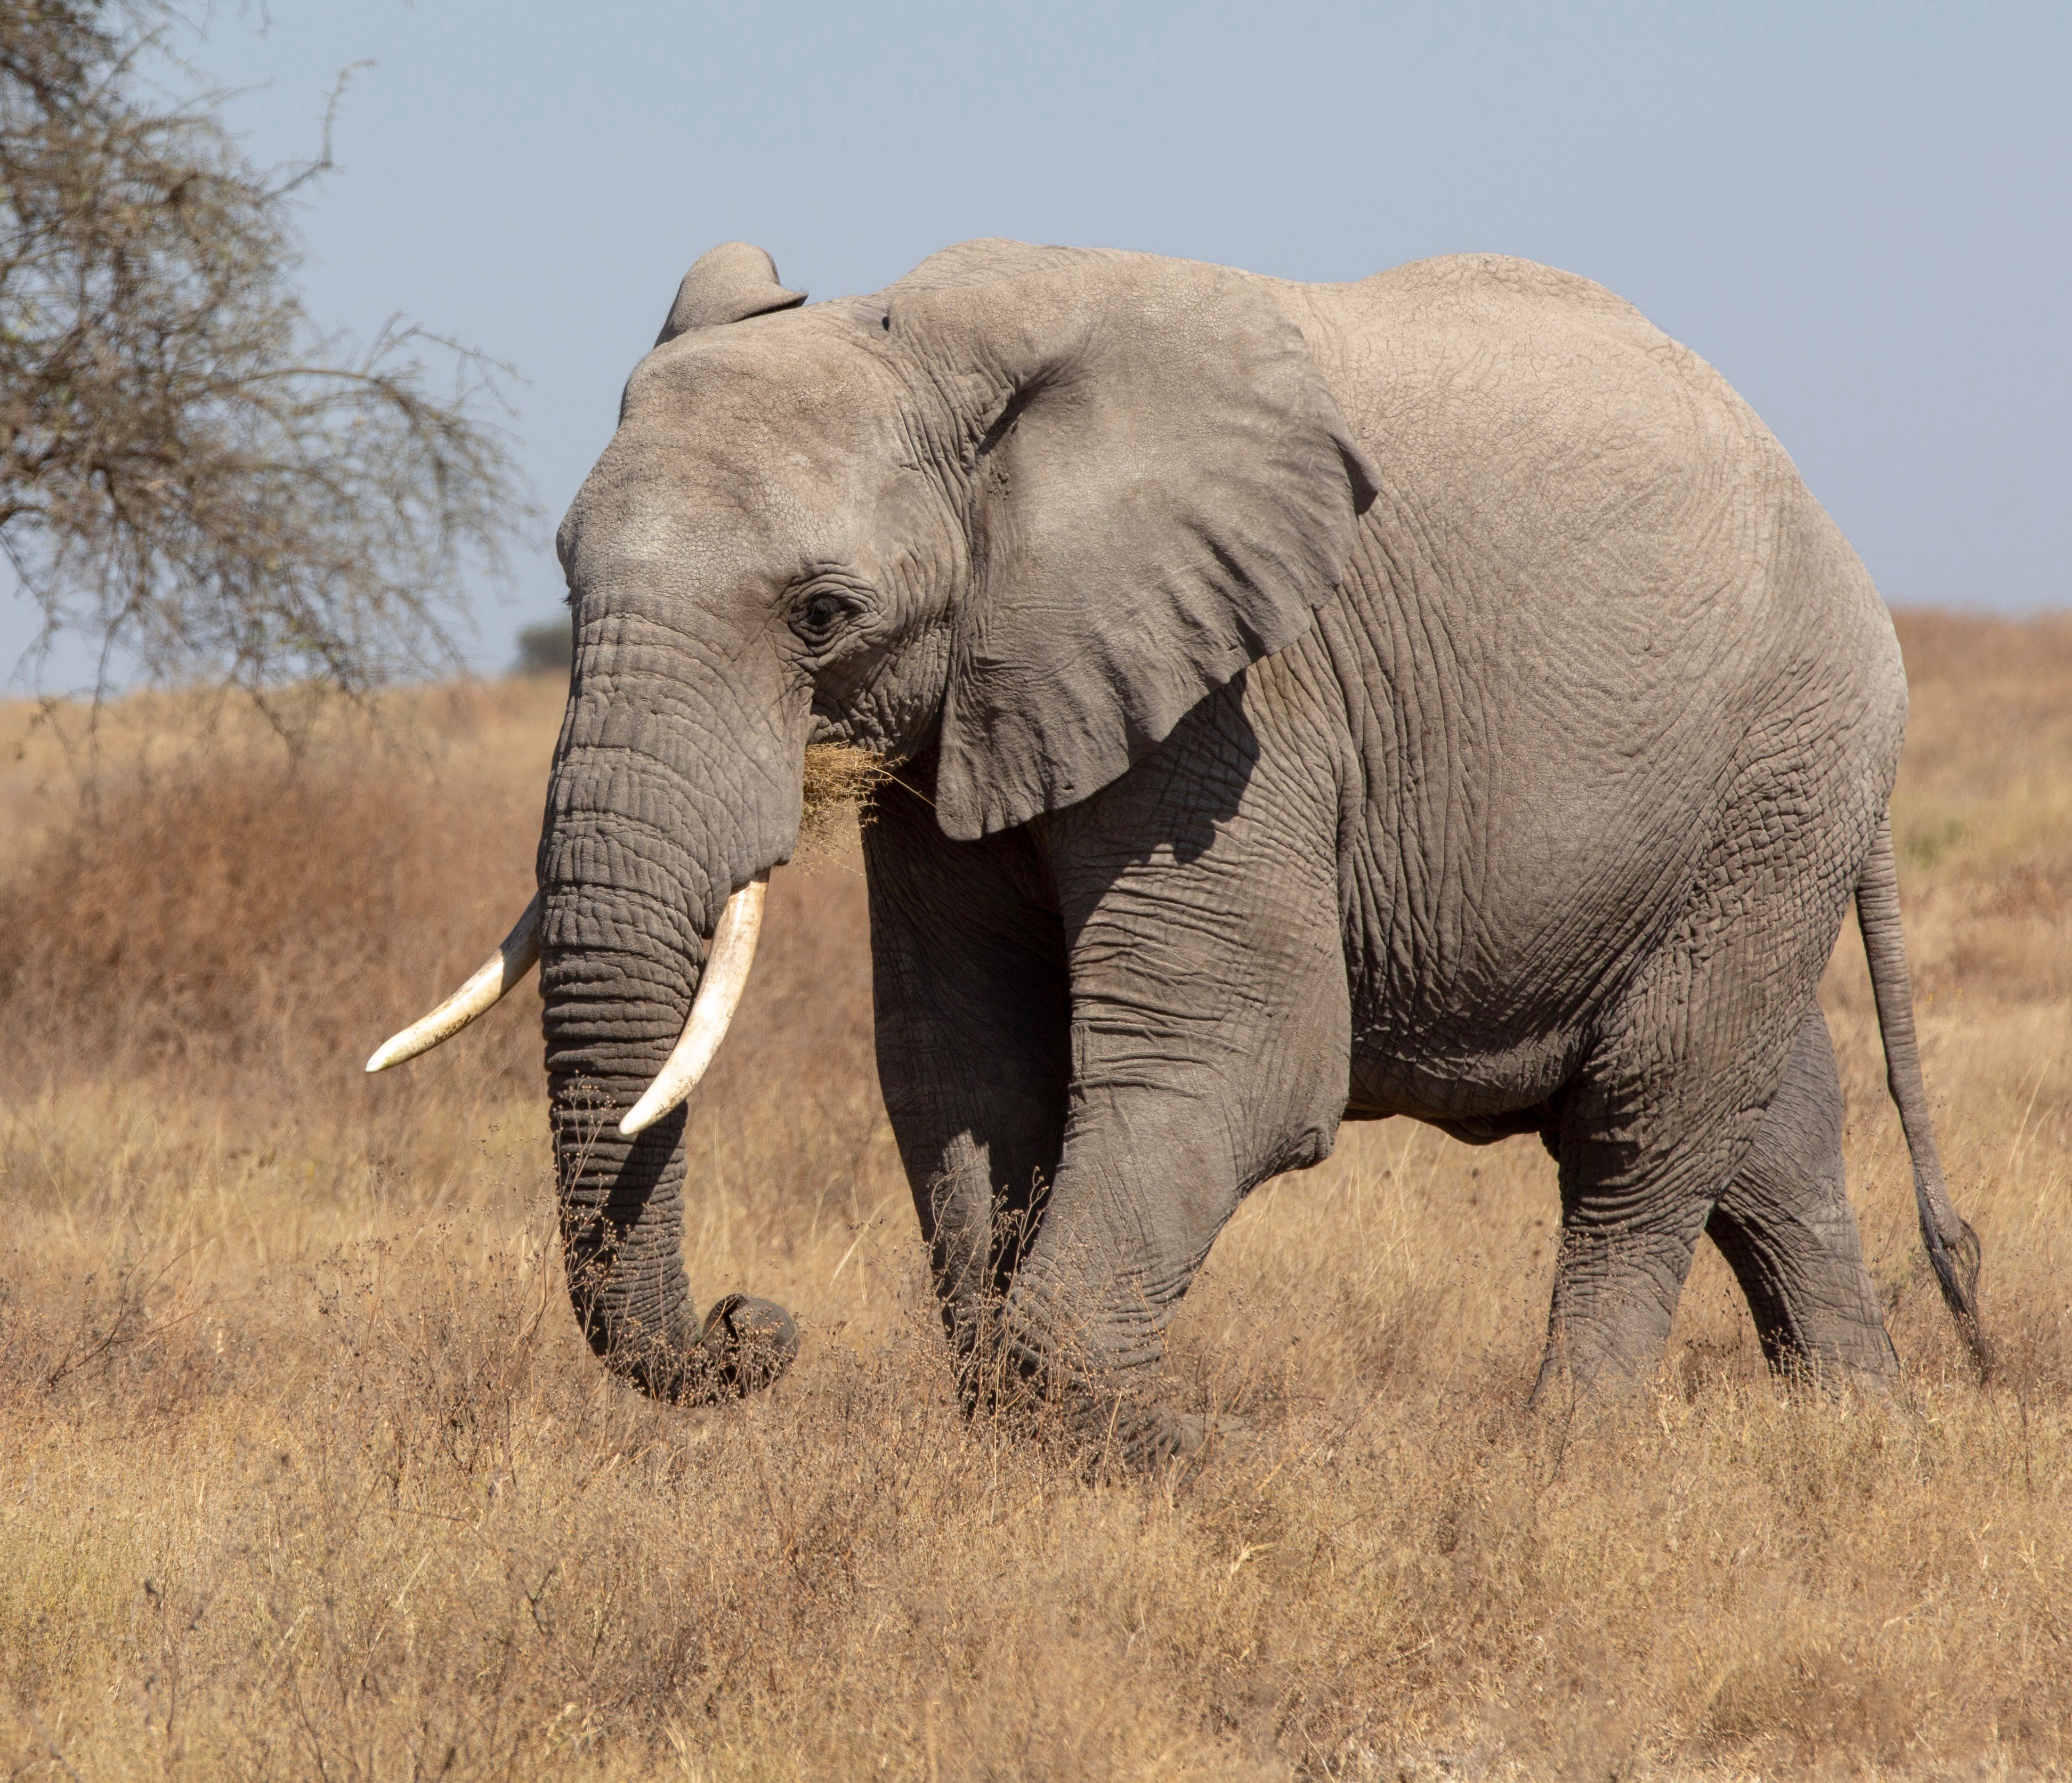 African savanna elephant. Photo by Jean-Daniel Calame on Unsplash